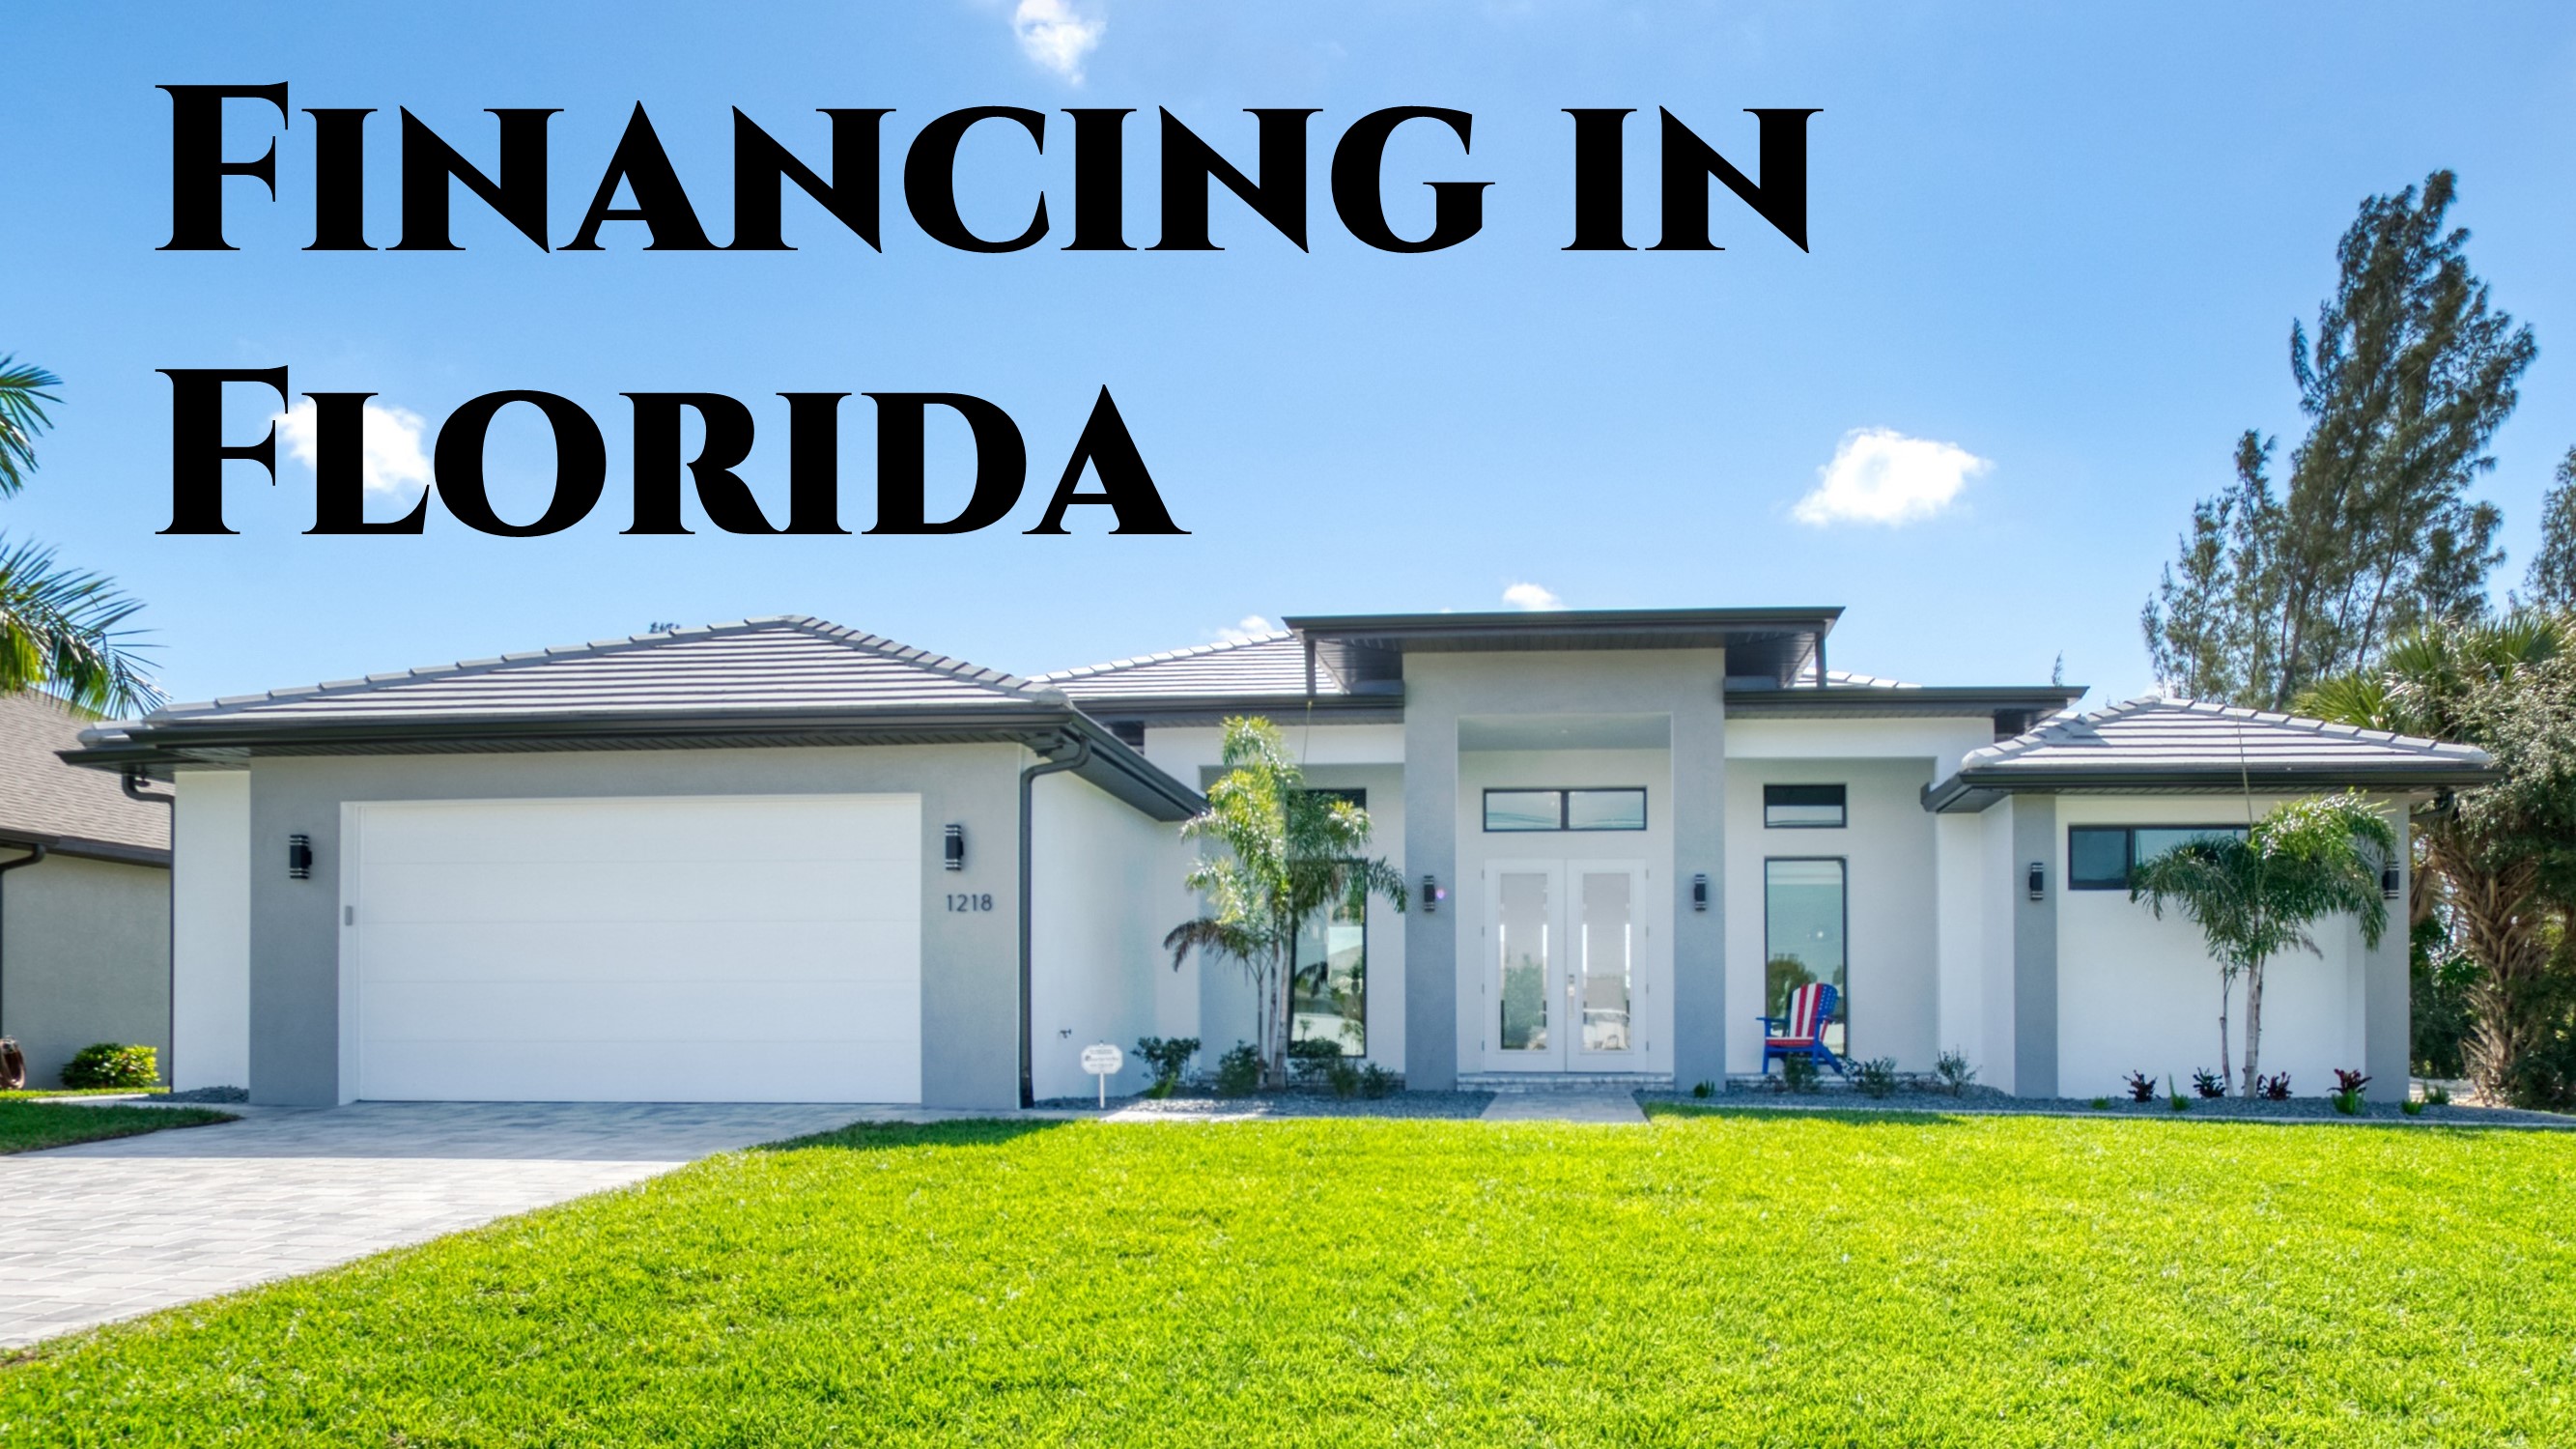 Financing in Florida